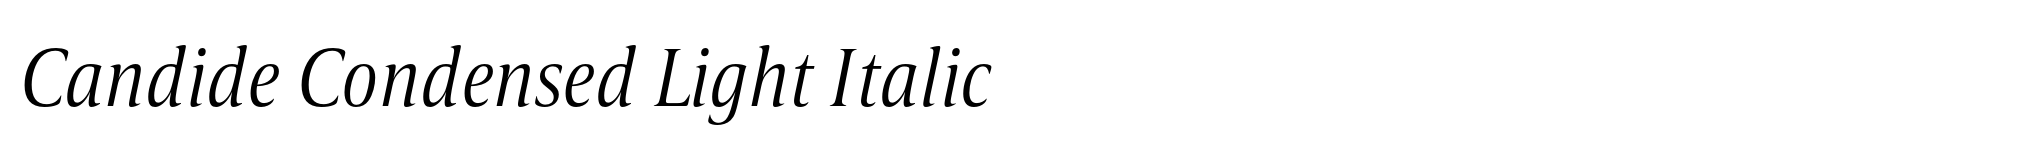 Candide Condensed Light Italic image